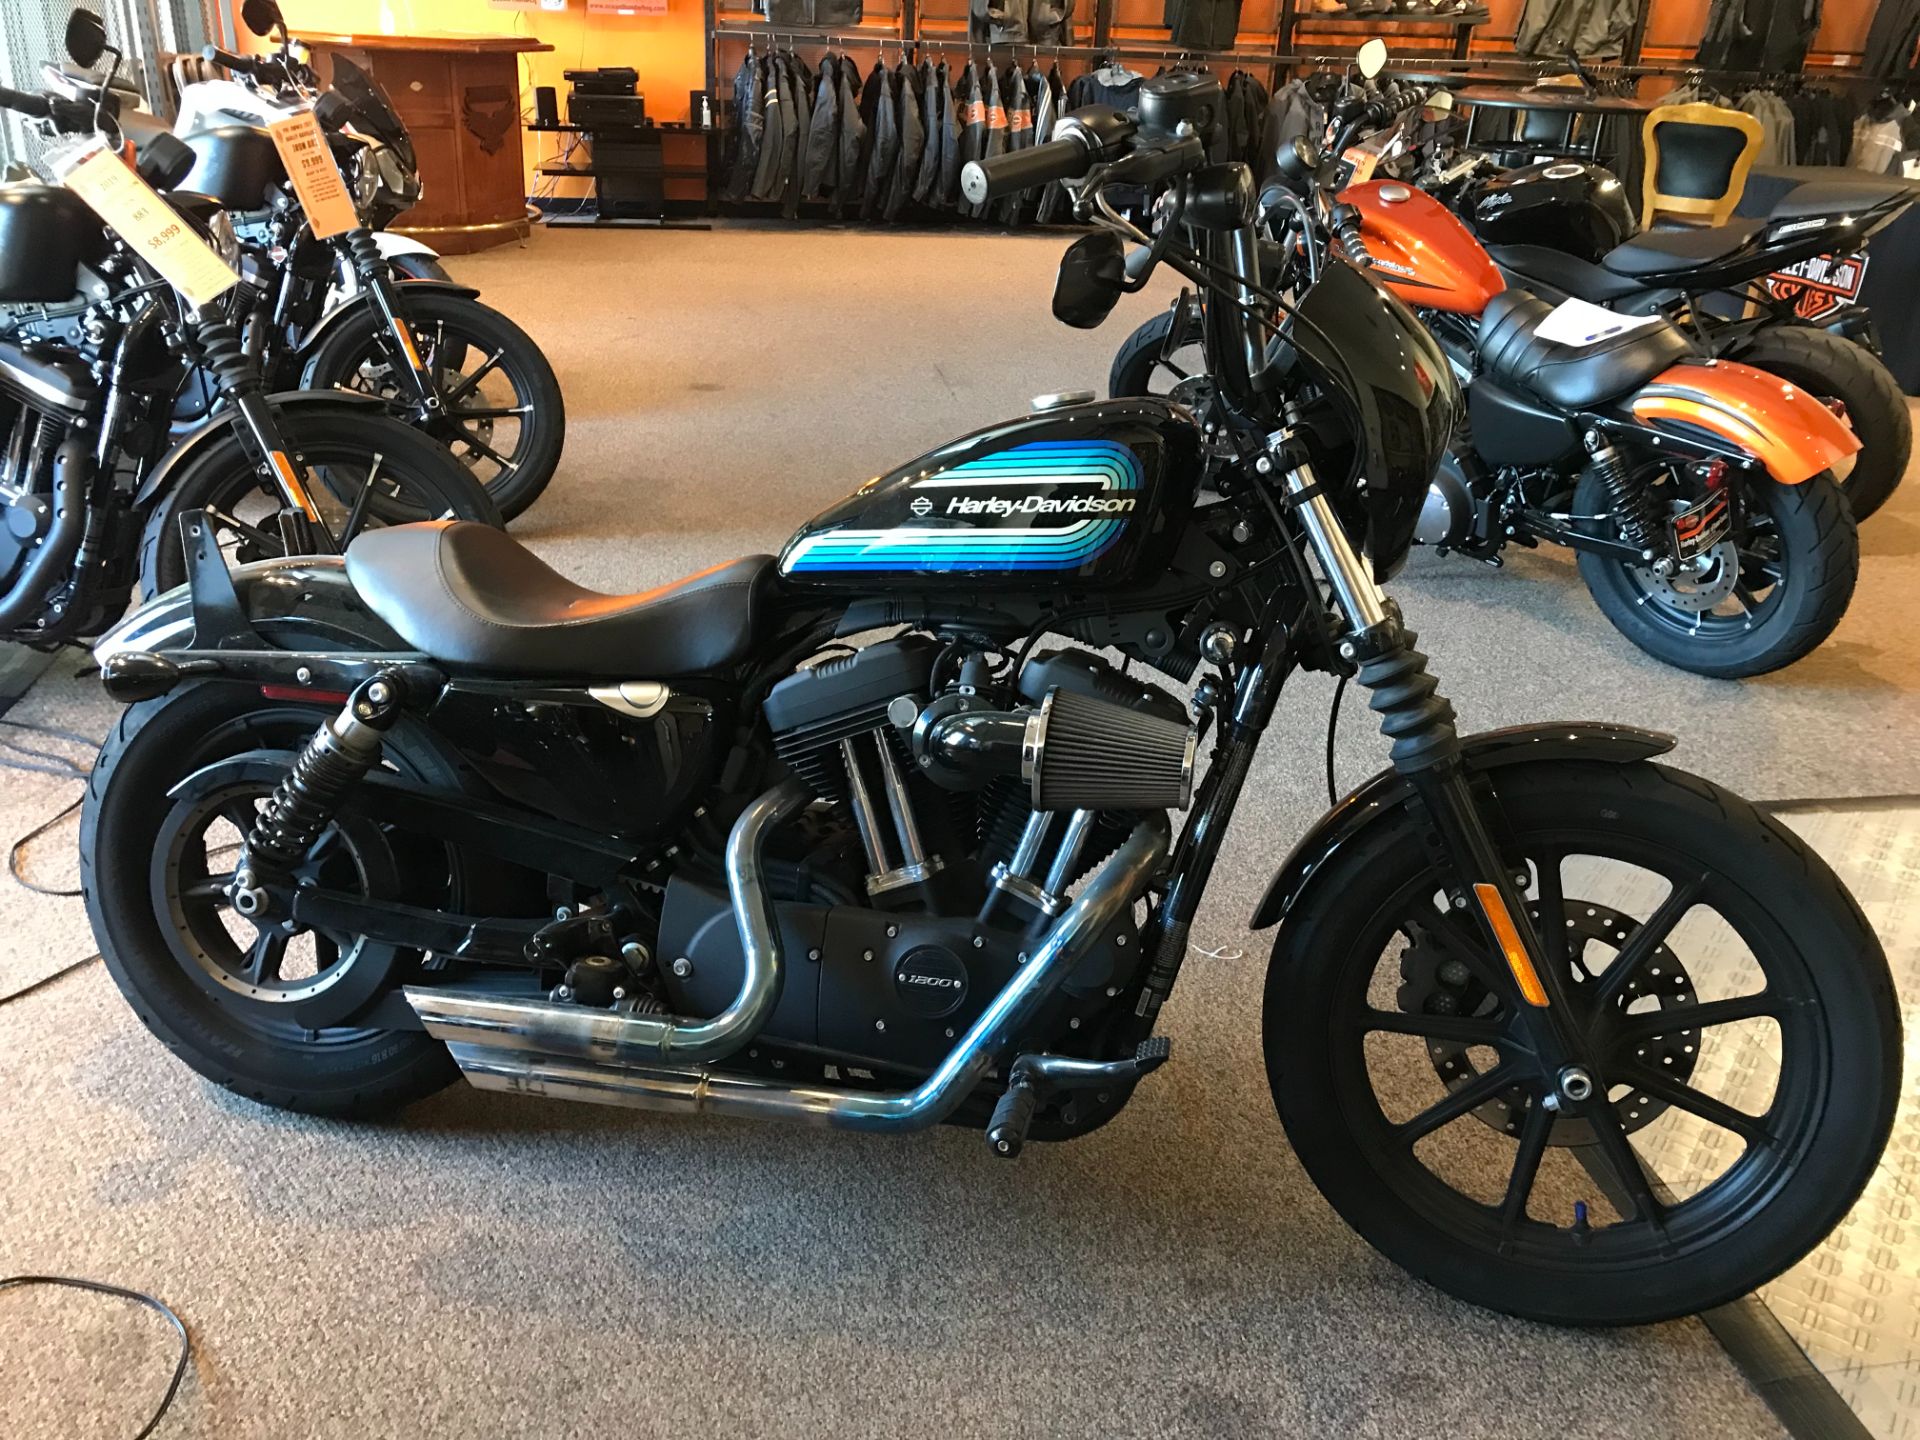 2019 Harley-Davidson 1200 IRON in Lakewood, New Jersey - Photo 1